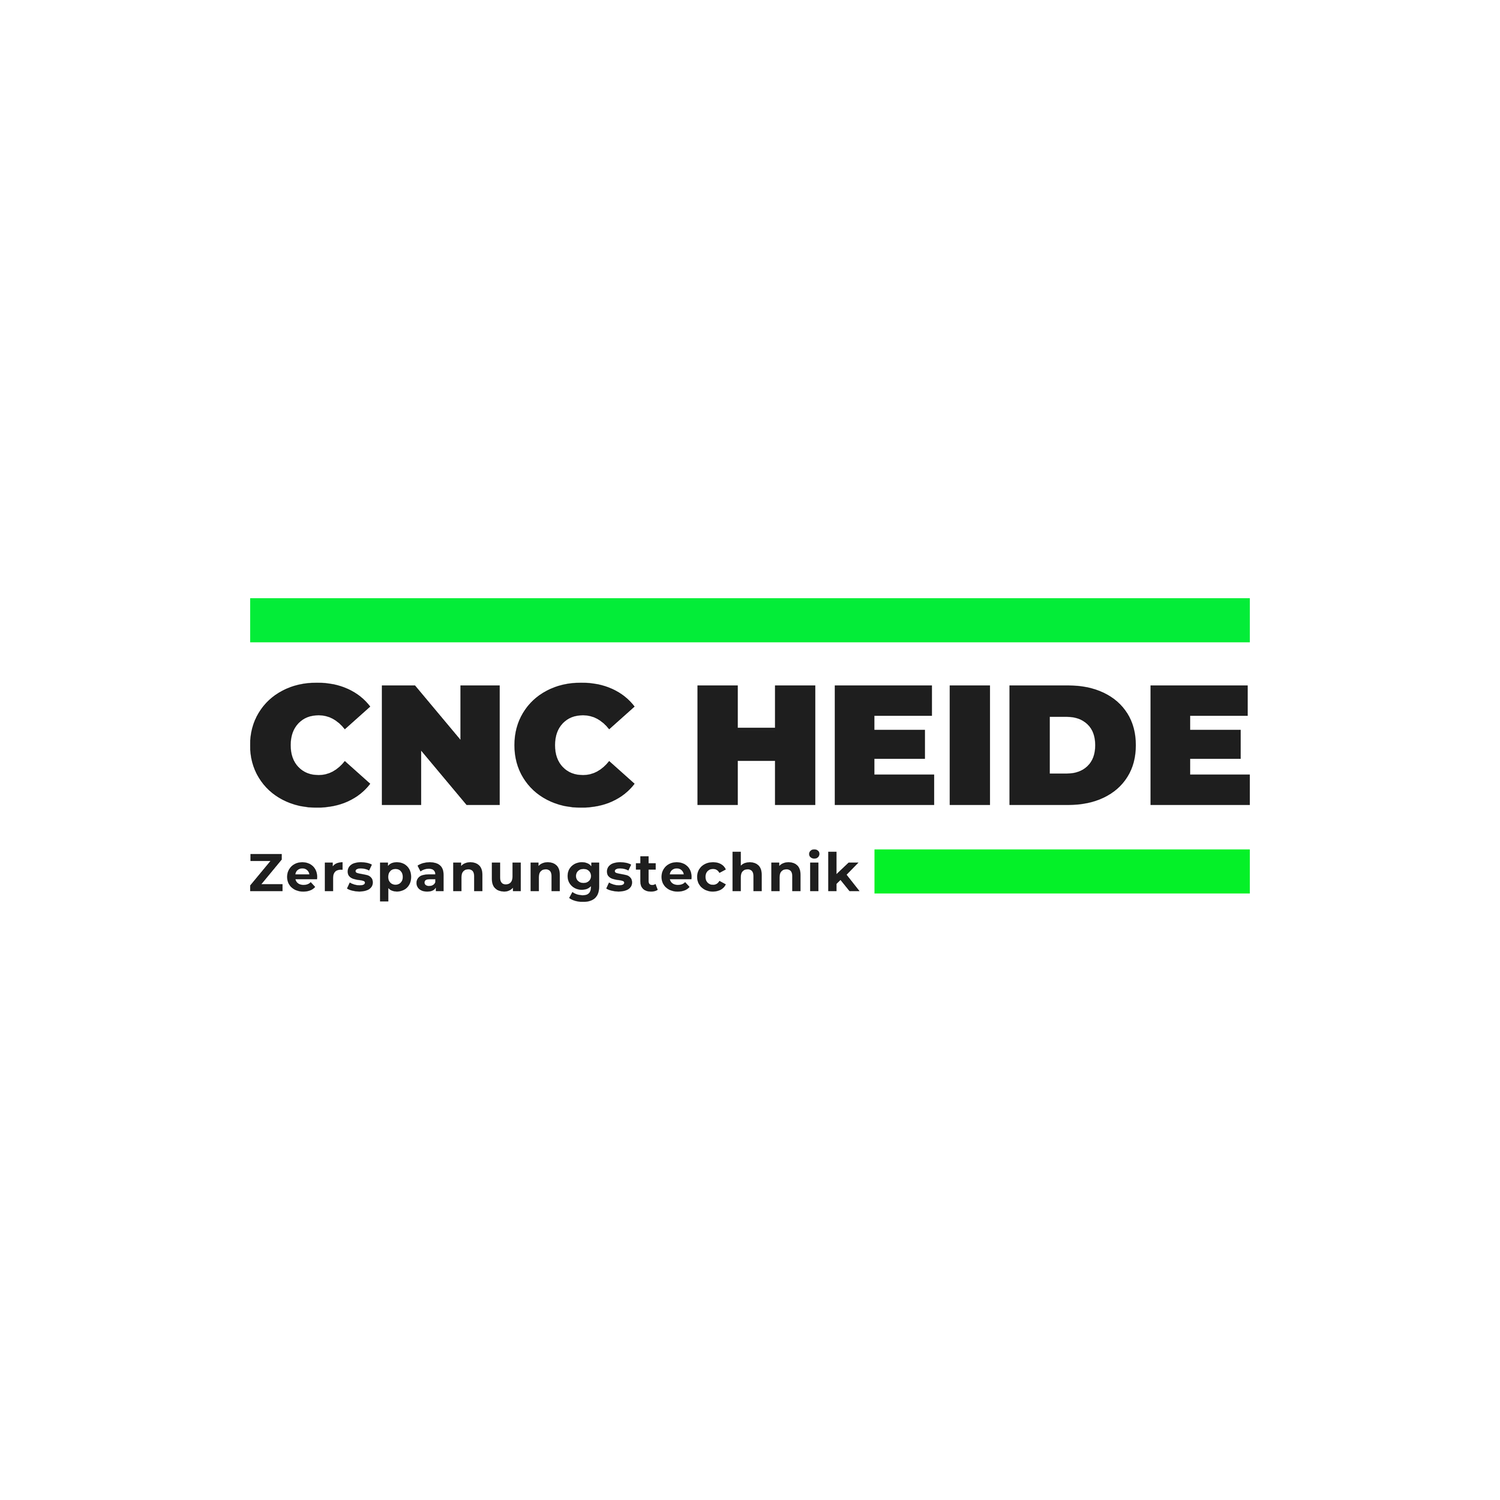 CNC HEIDE Zerspanungstechnik